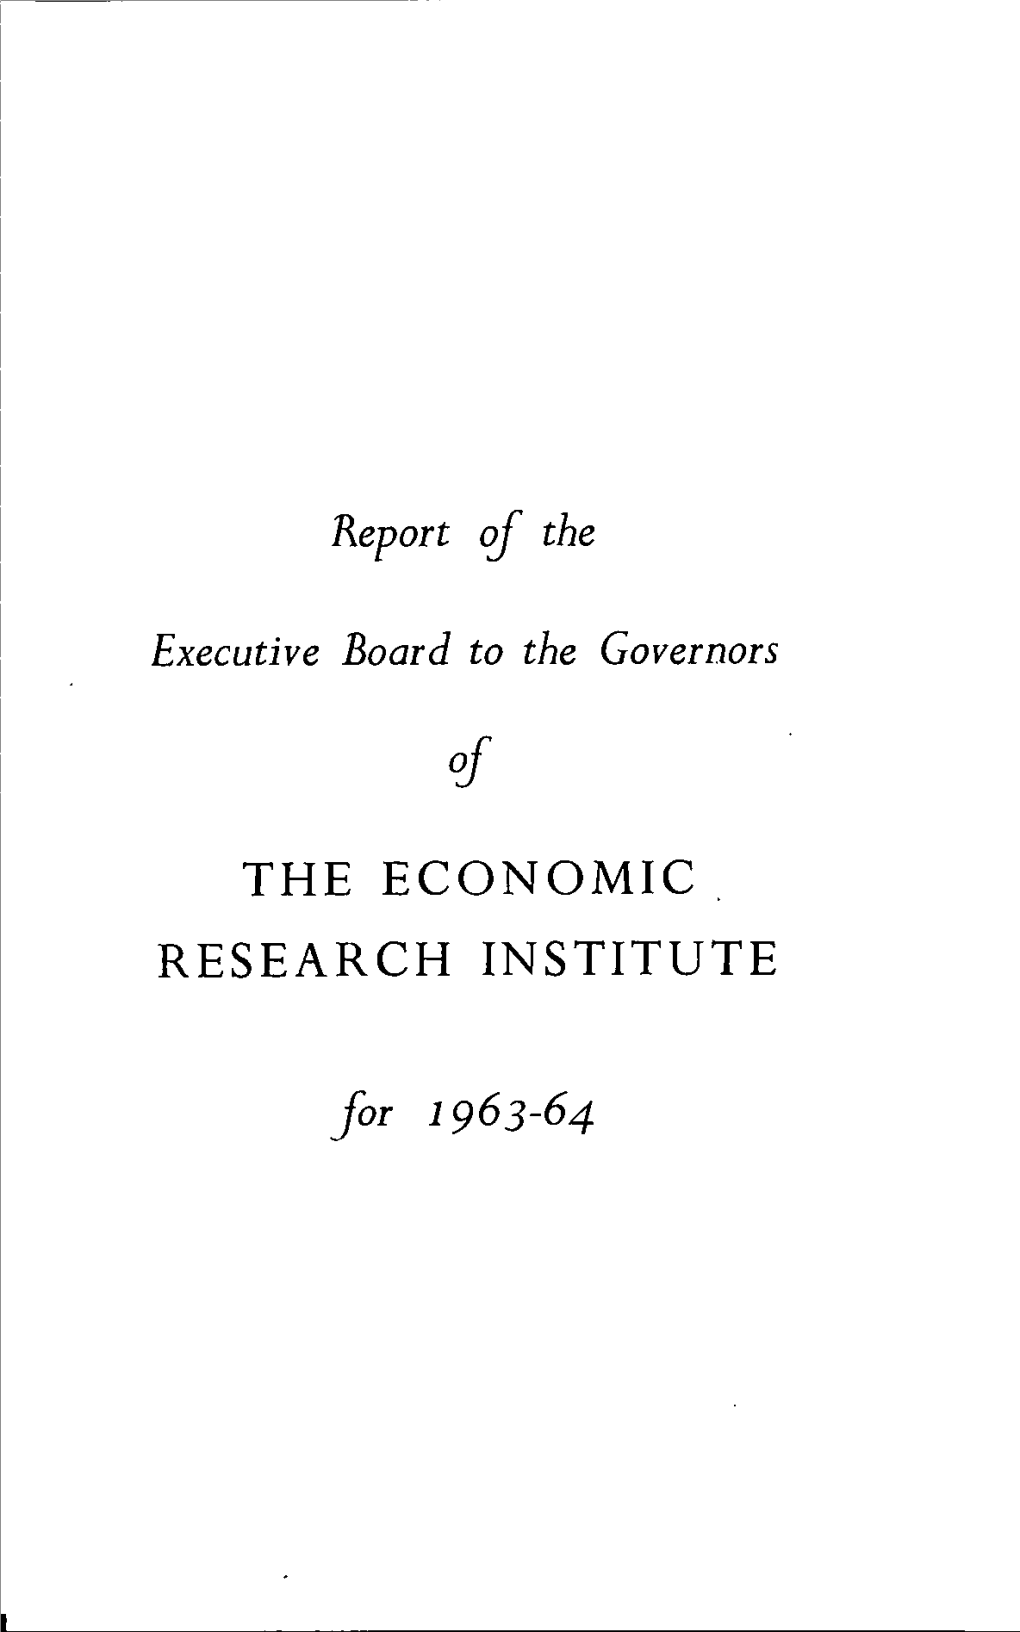 The Economic Research Institute the Economic Research Institute